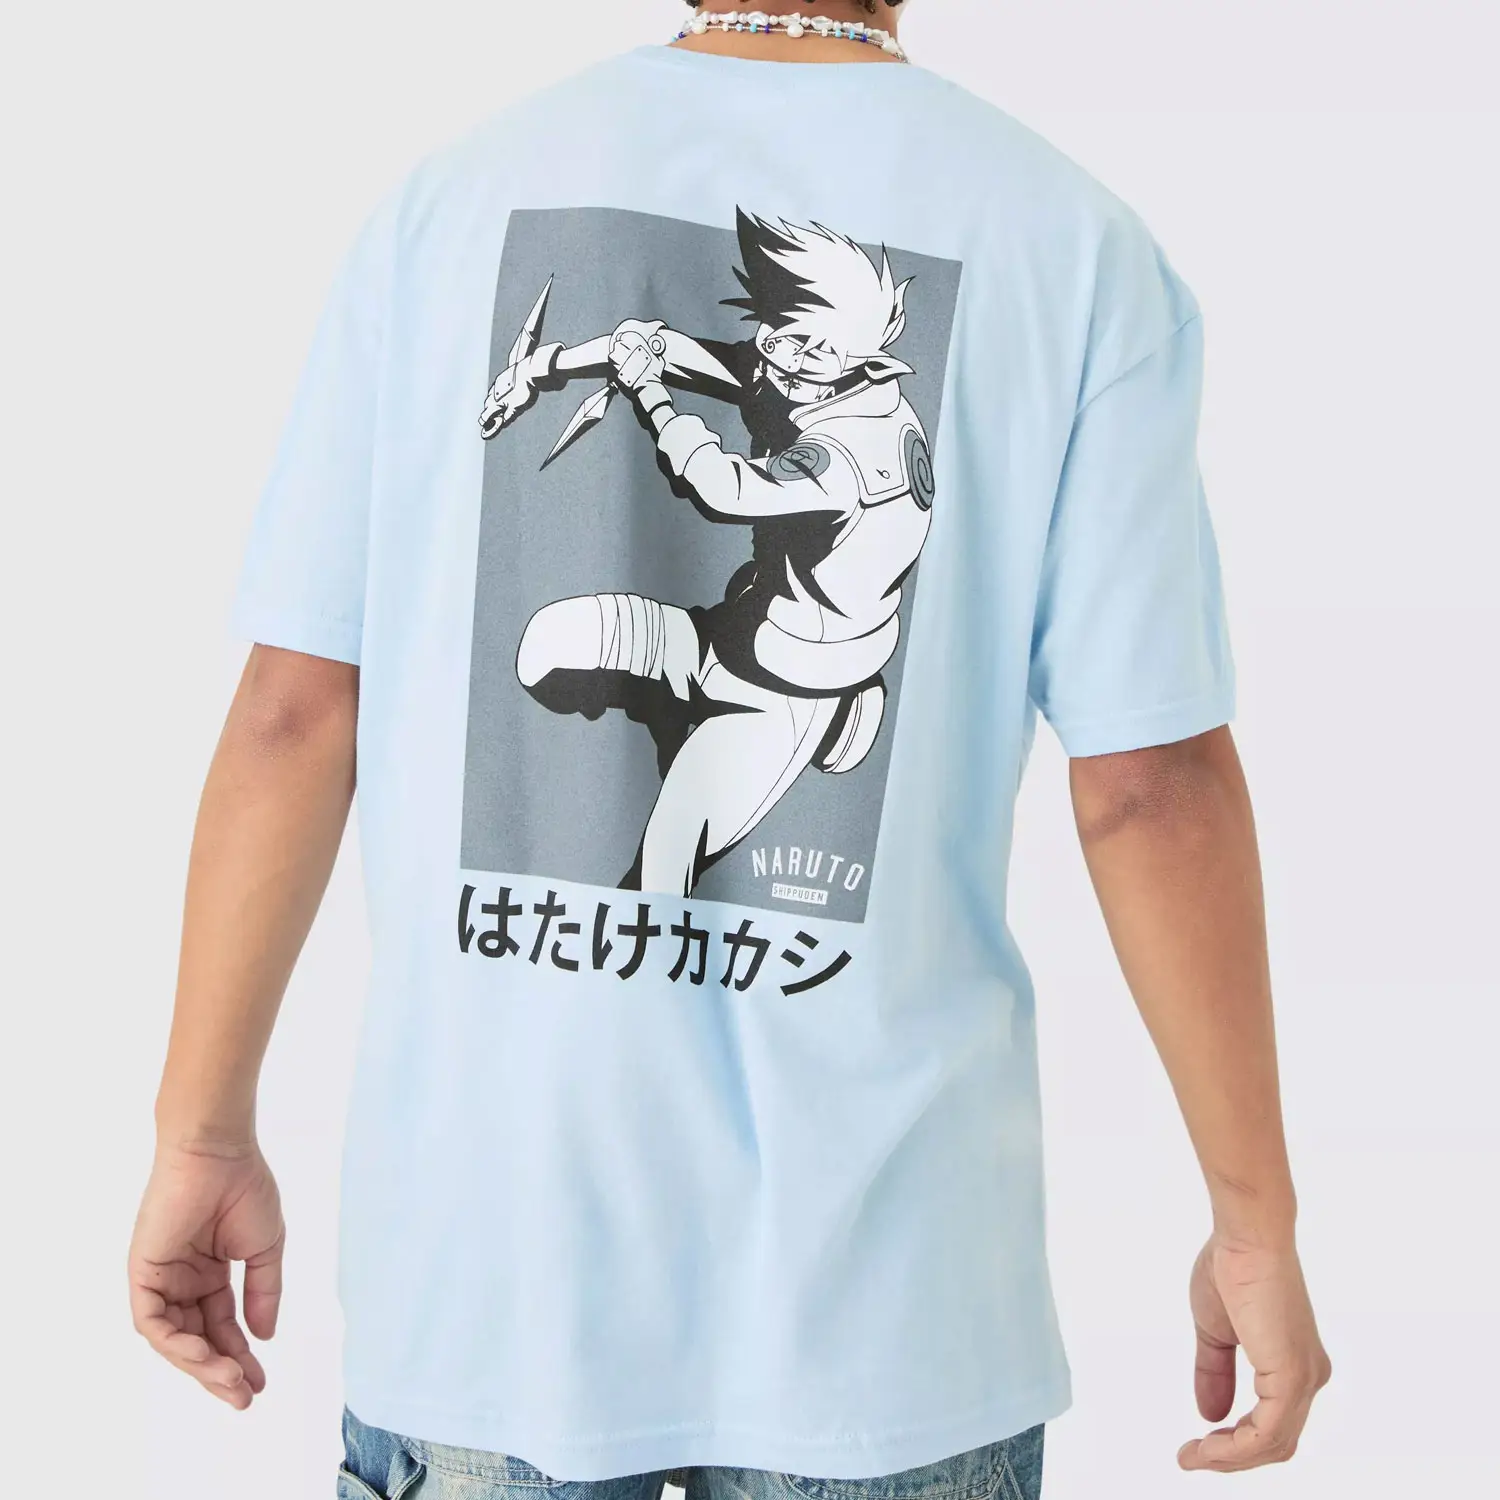 Authentieke Oversized Anime Wash T-Shirt Premium Katoenmix, Comfortabele Pasvorm, Exclusief Design Vrijetijdskleding